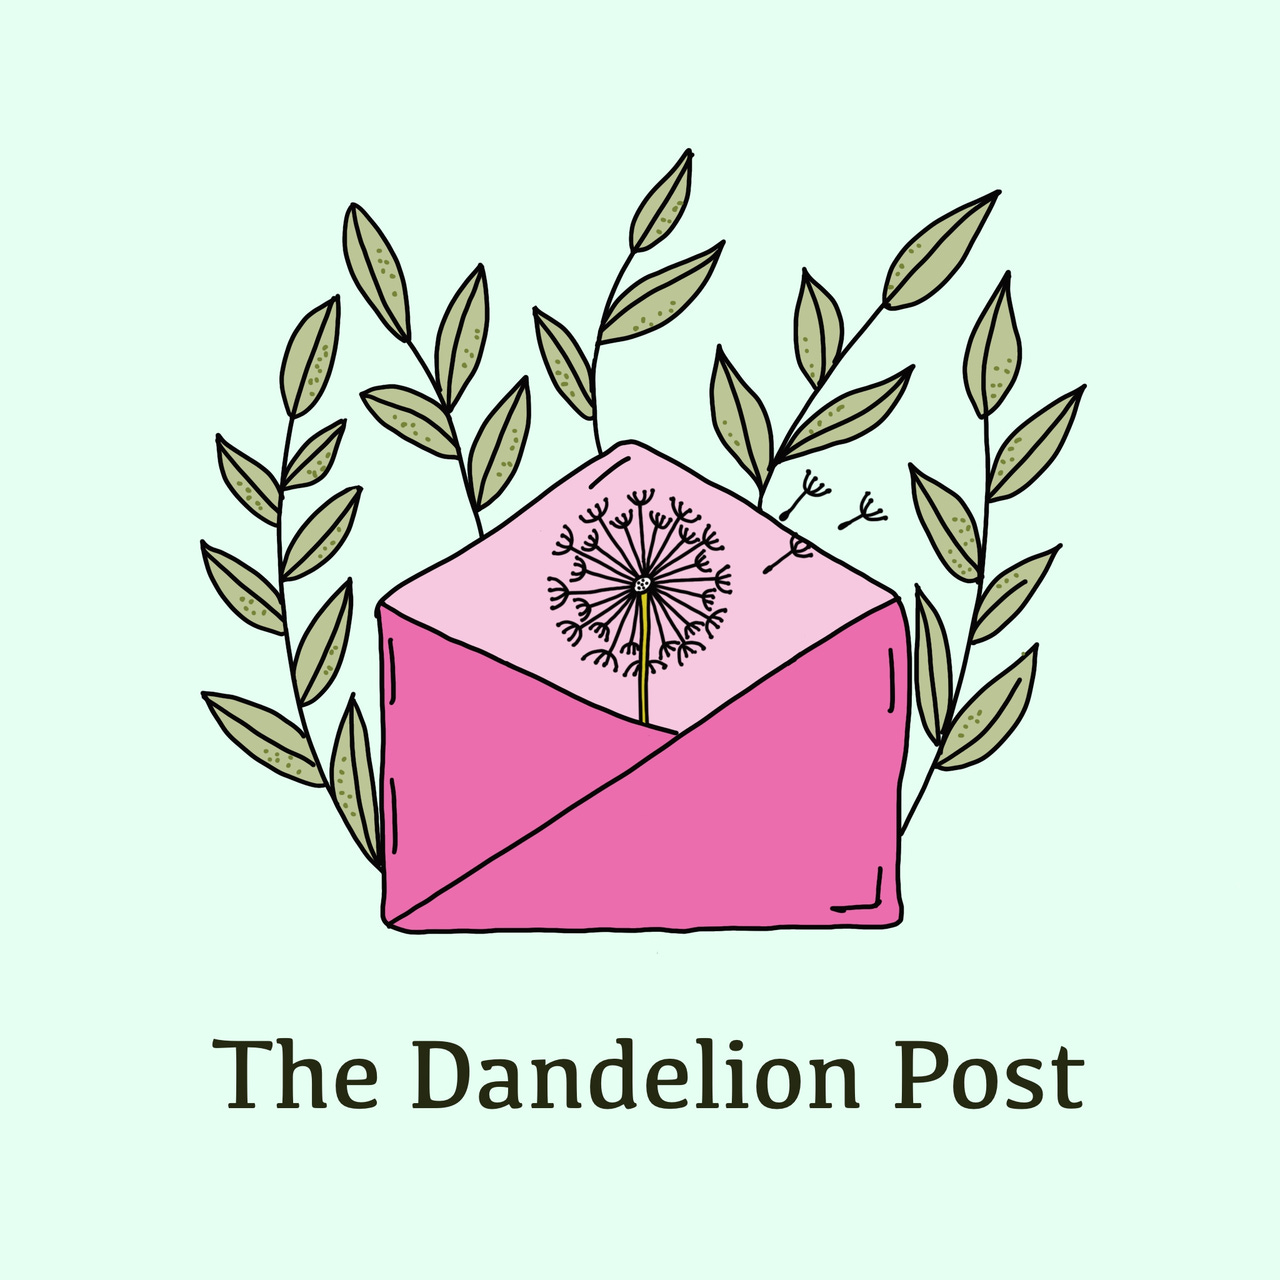 The Dandelion Post